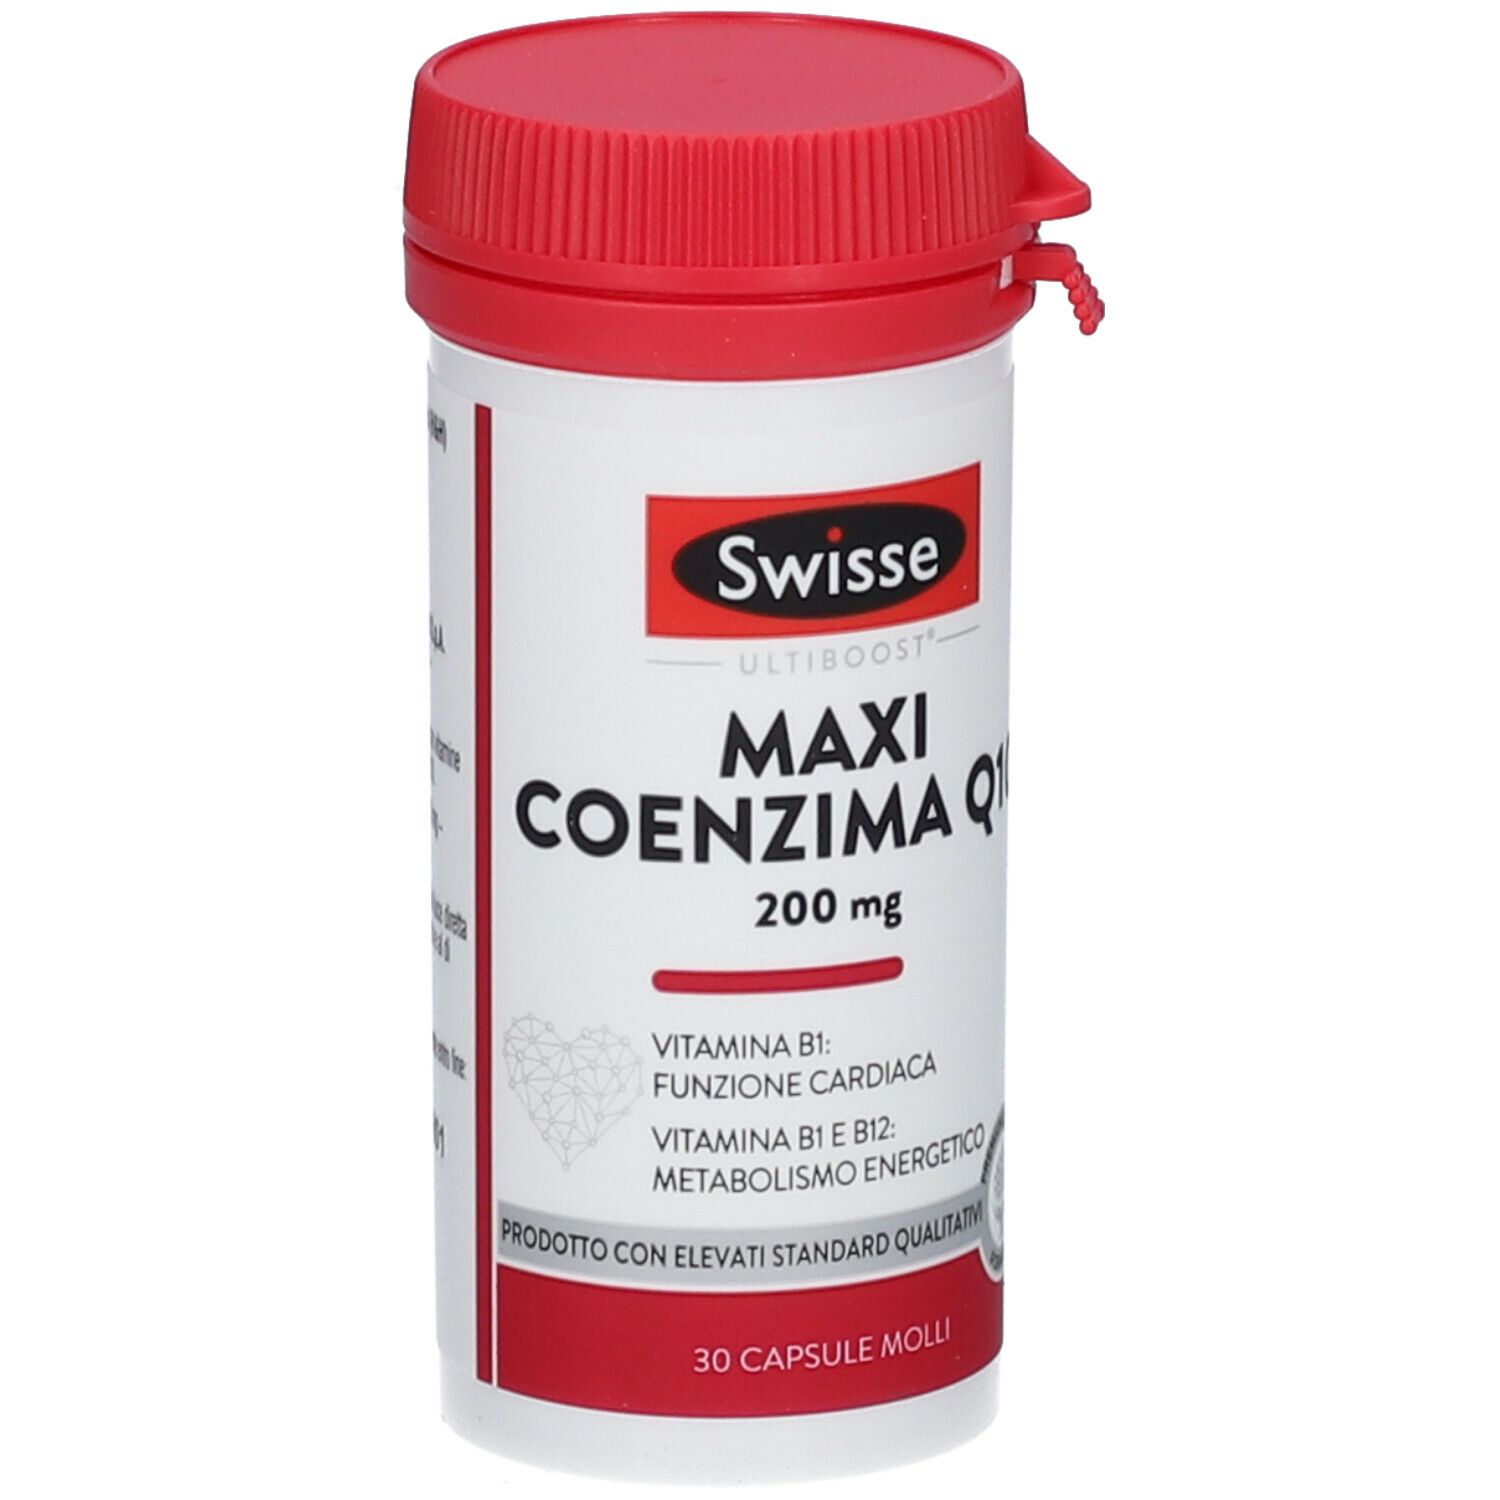 Swisse Maxi Coenzima Q10